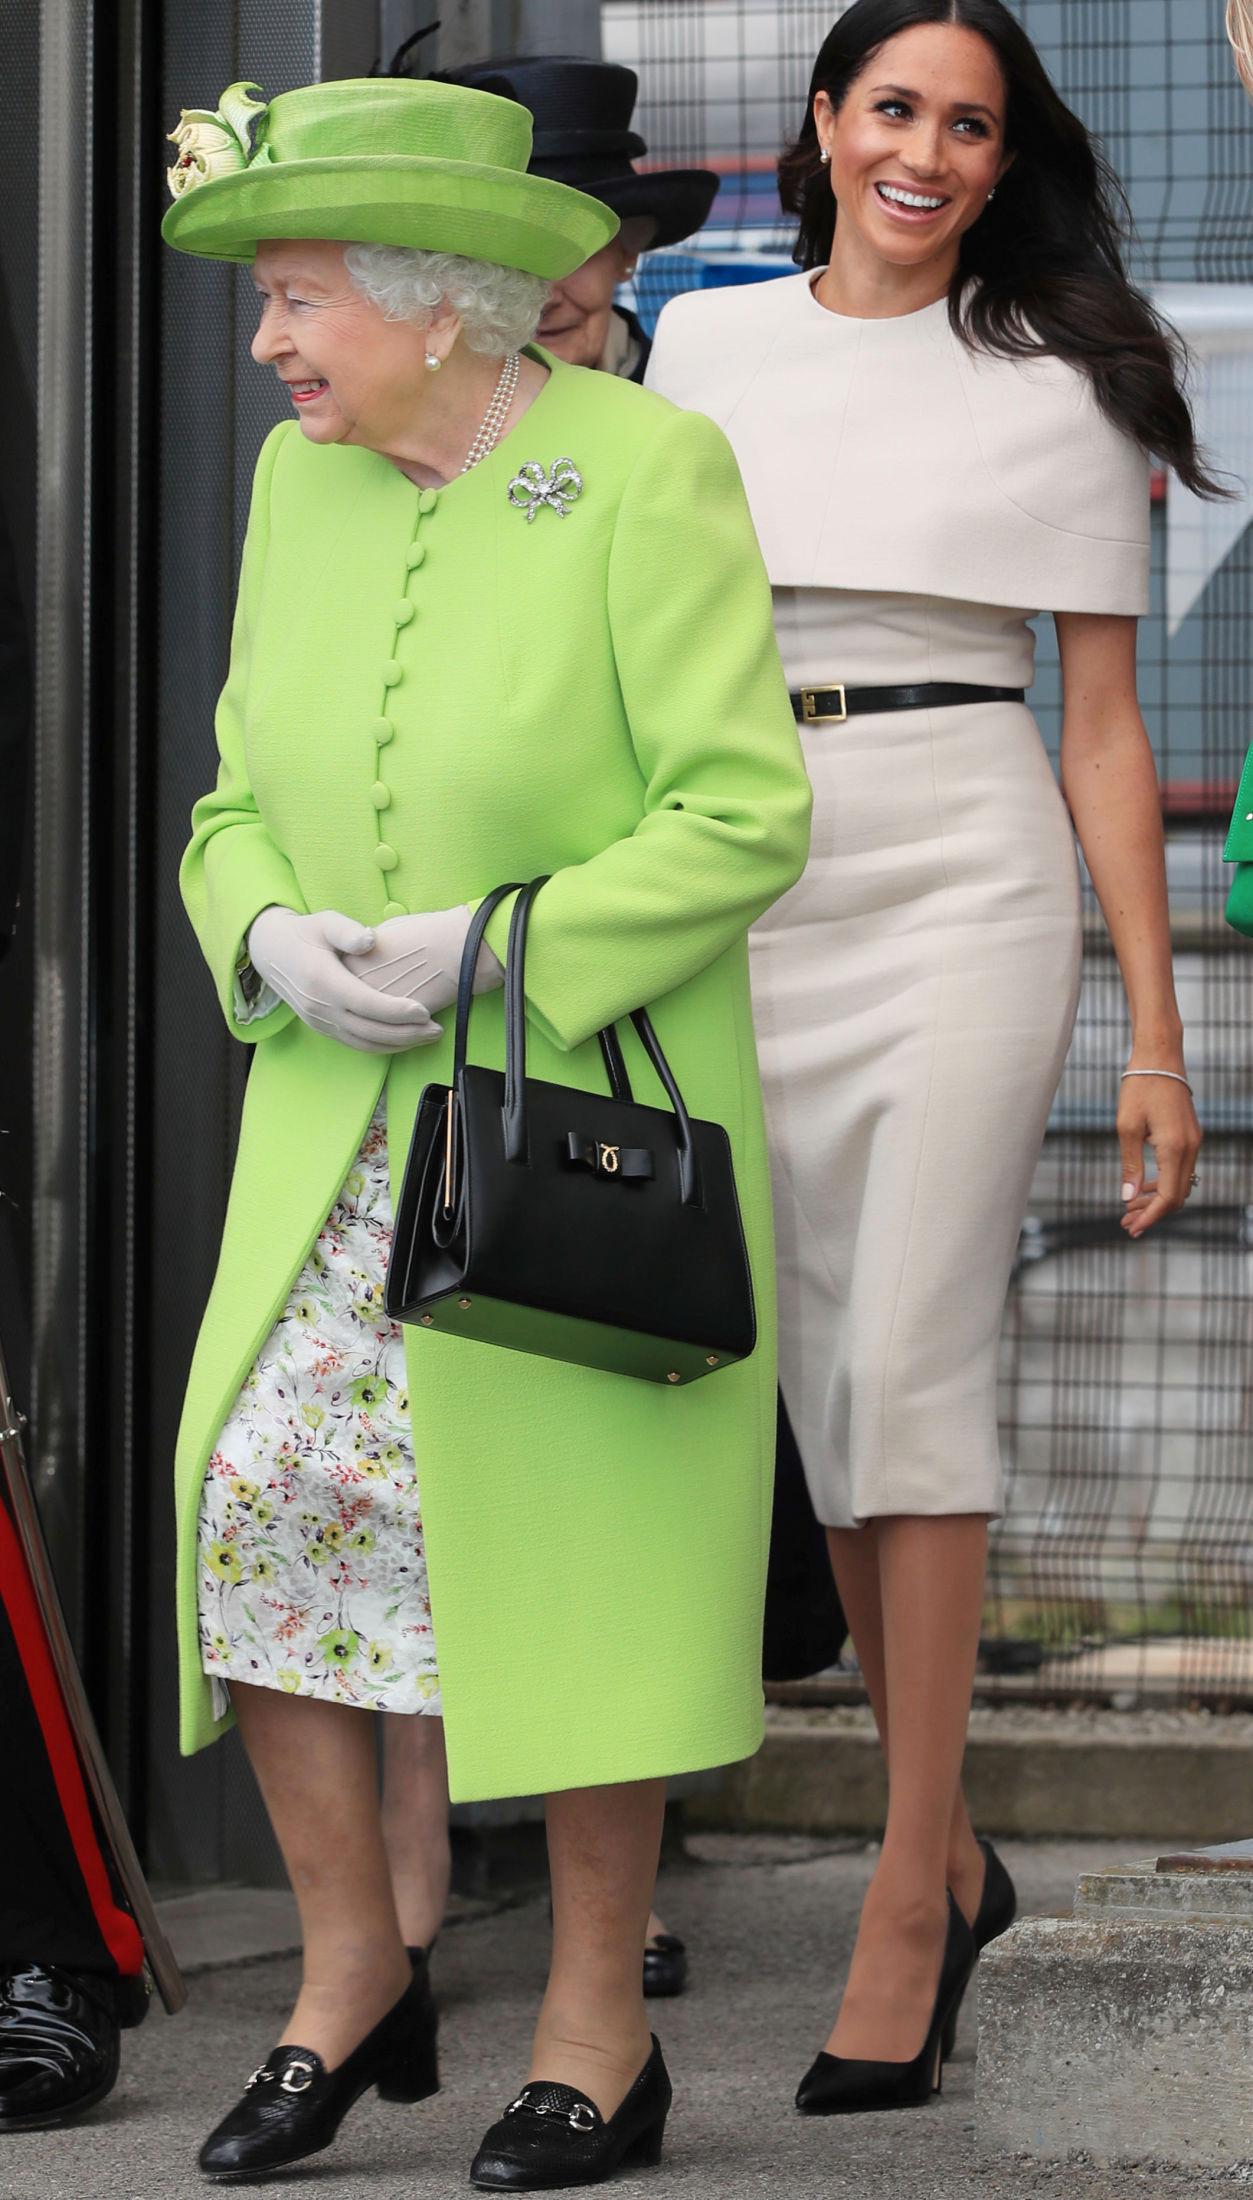 ALLTID MATCHENDE: Dronning Elizabeth har en rekke fargerike kåper og drakter med matchende hatter. Foto: Reuters.